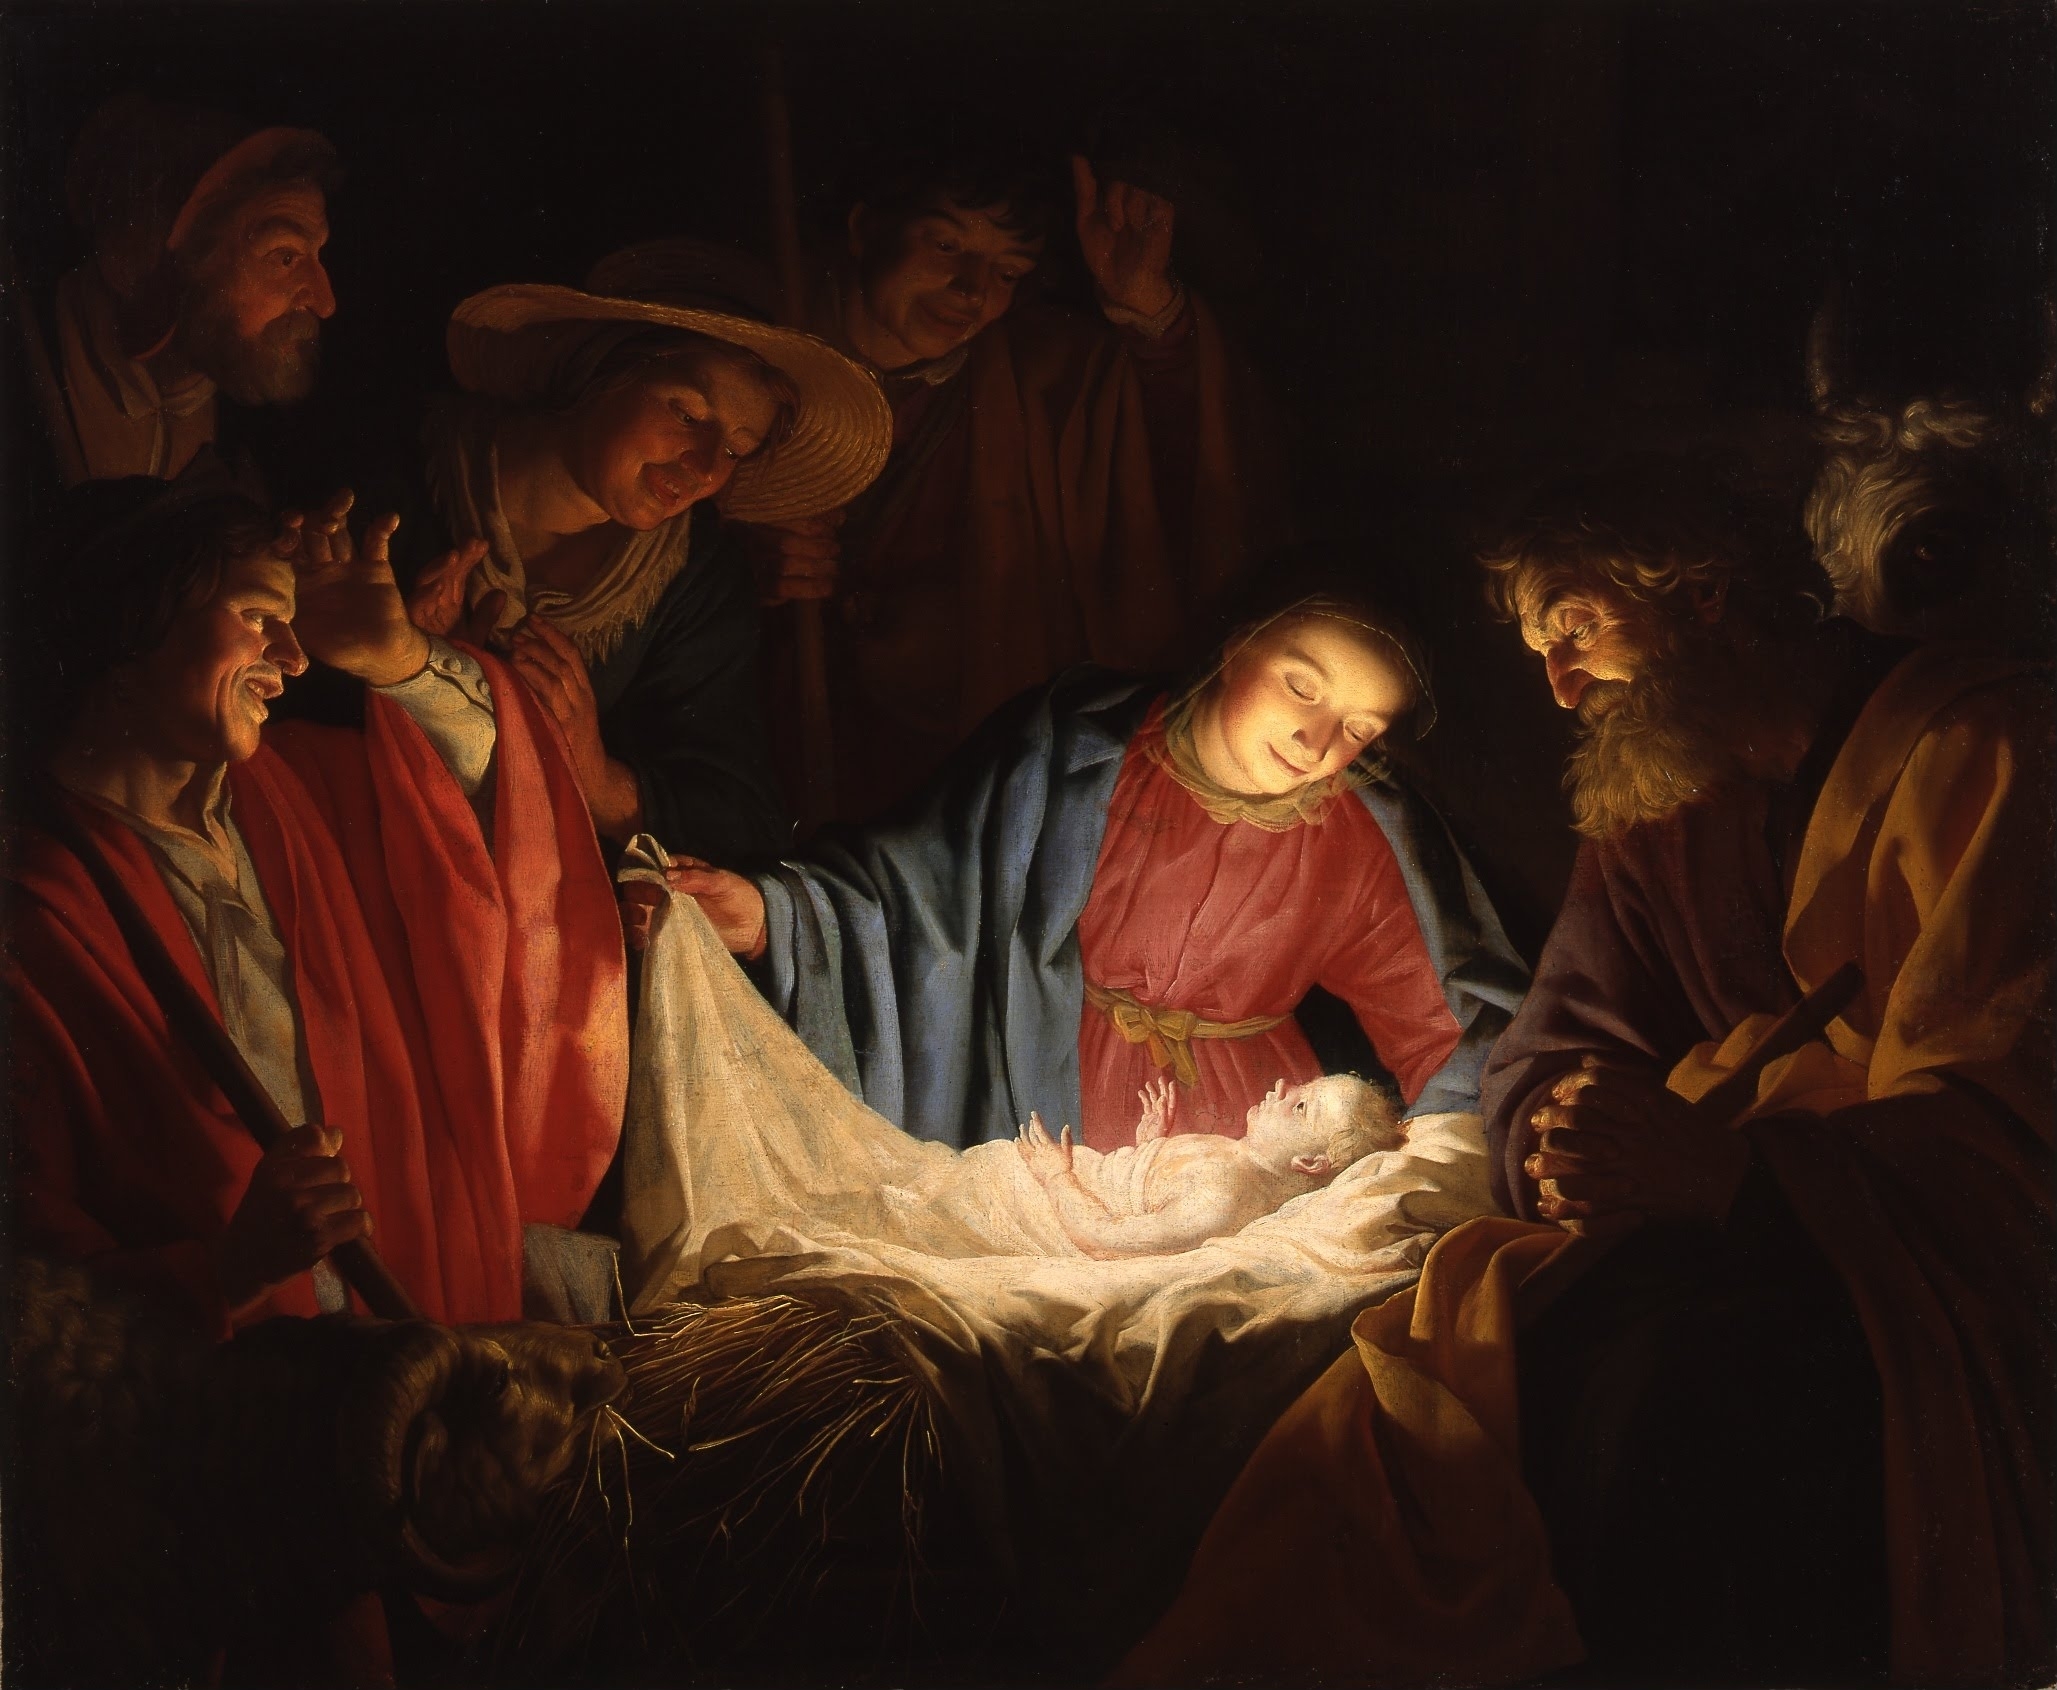 Luke’s Nativity Story